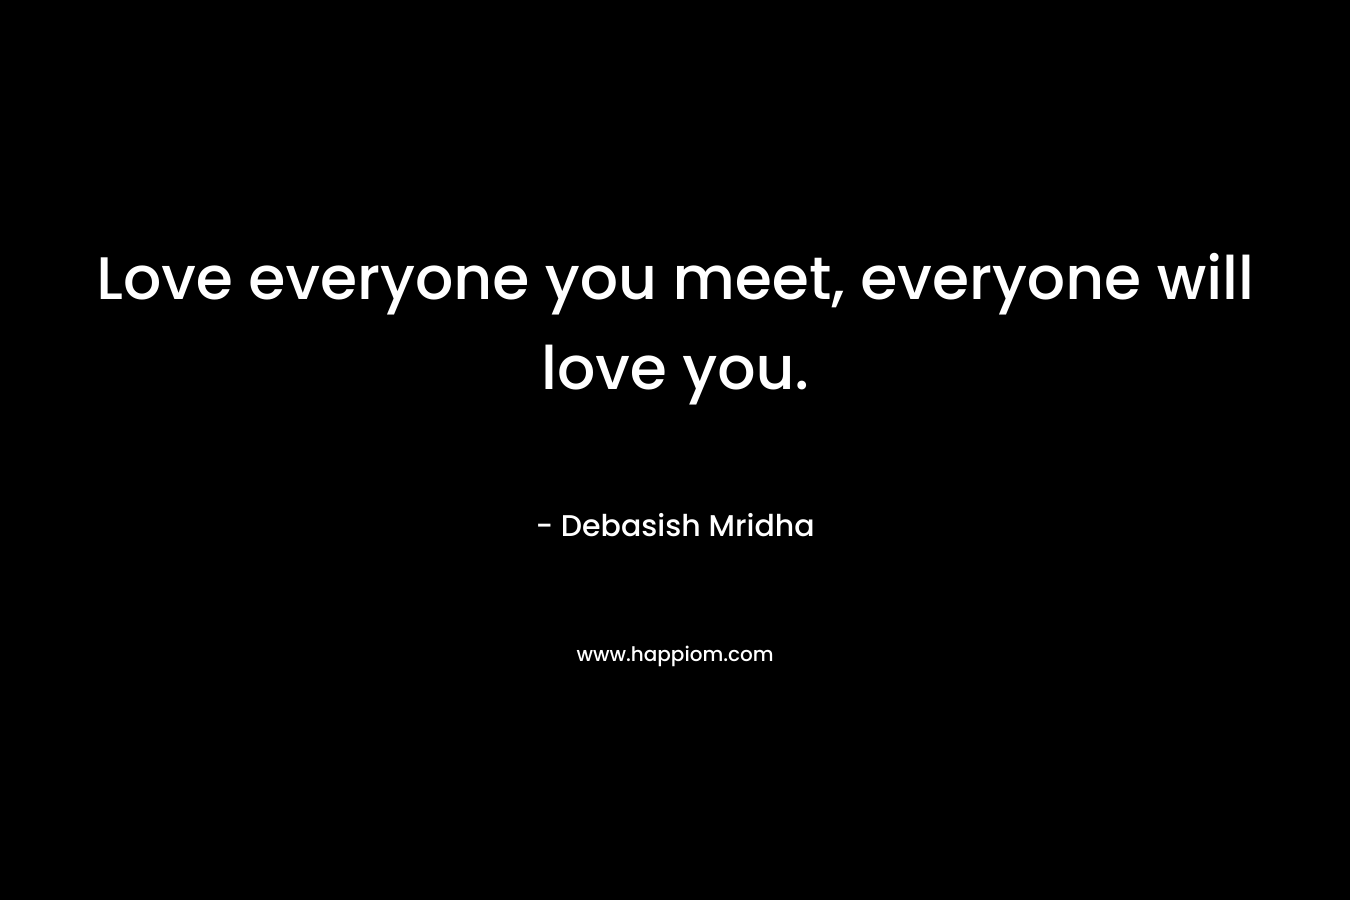 Love everyone you meet, everyone will love you.